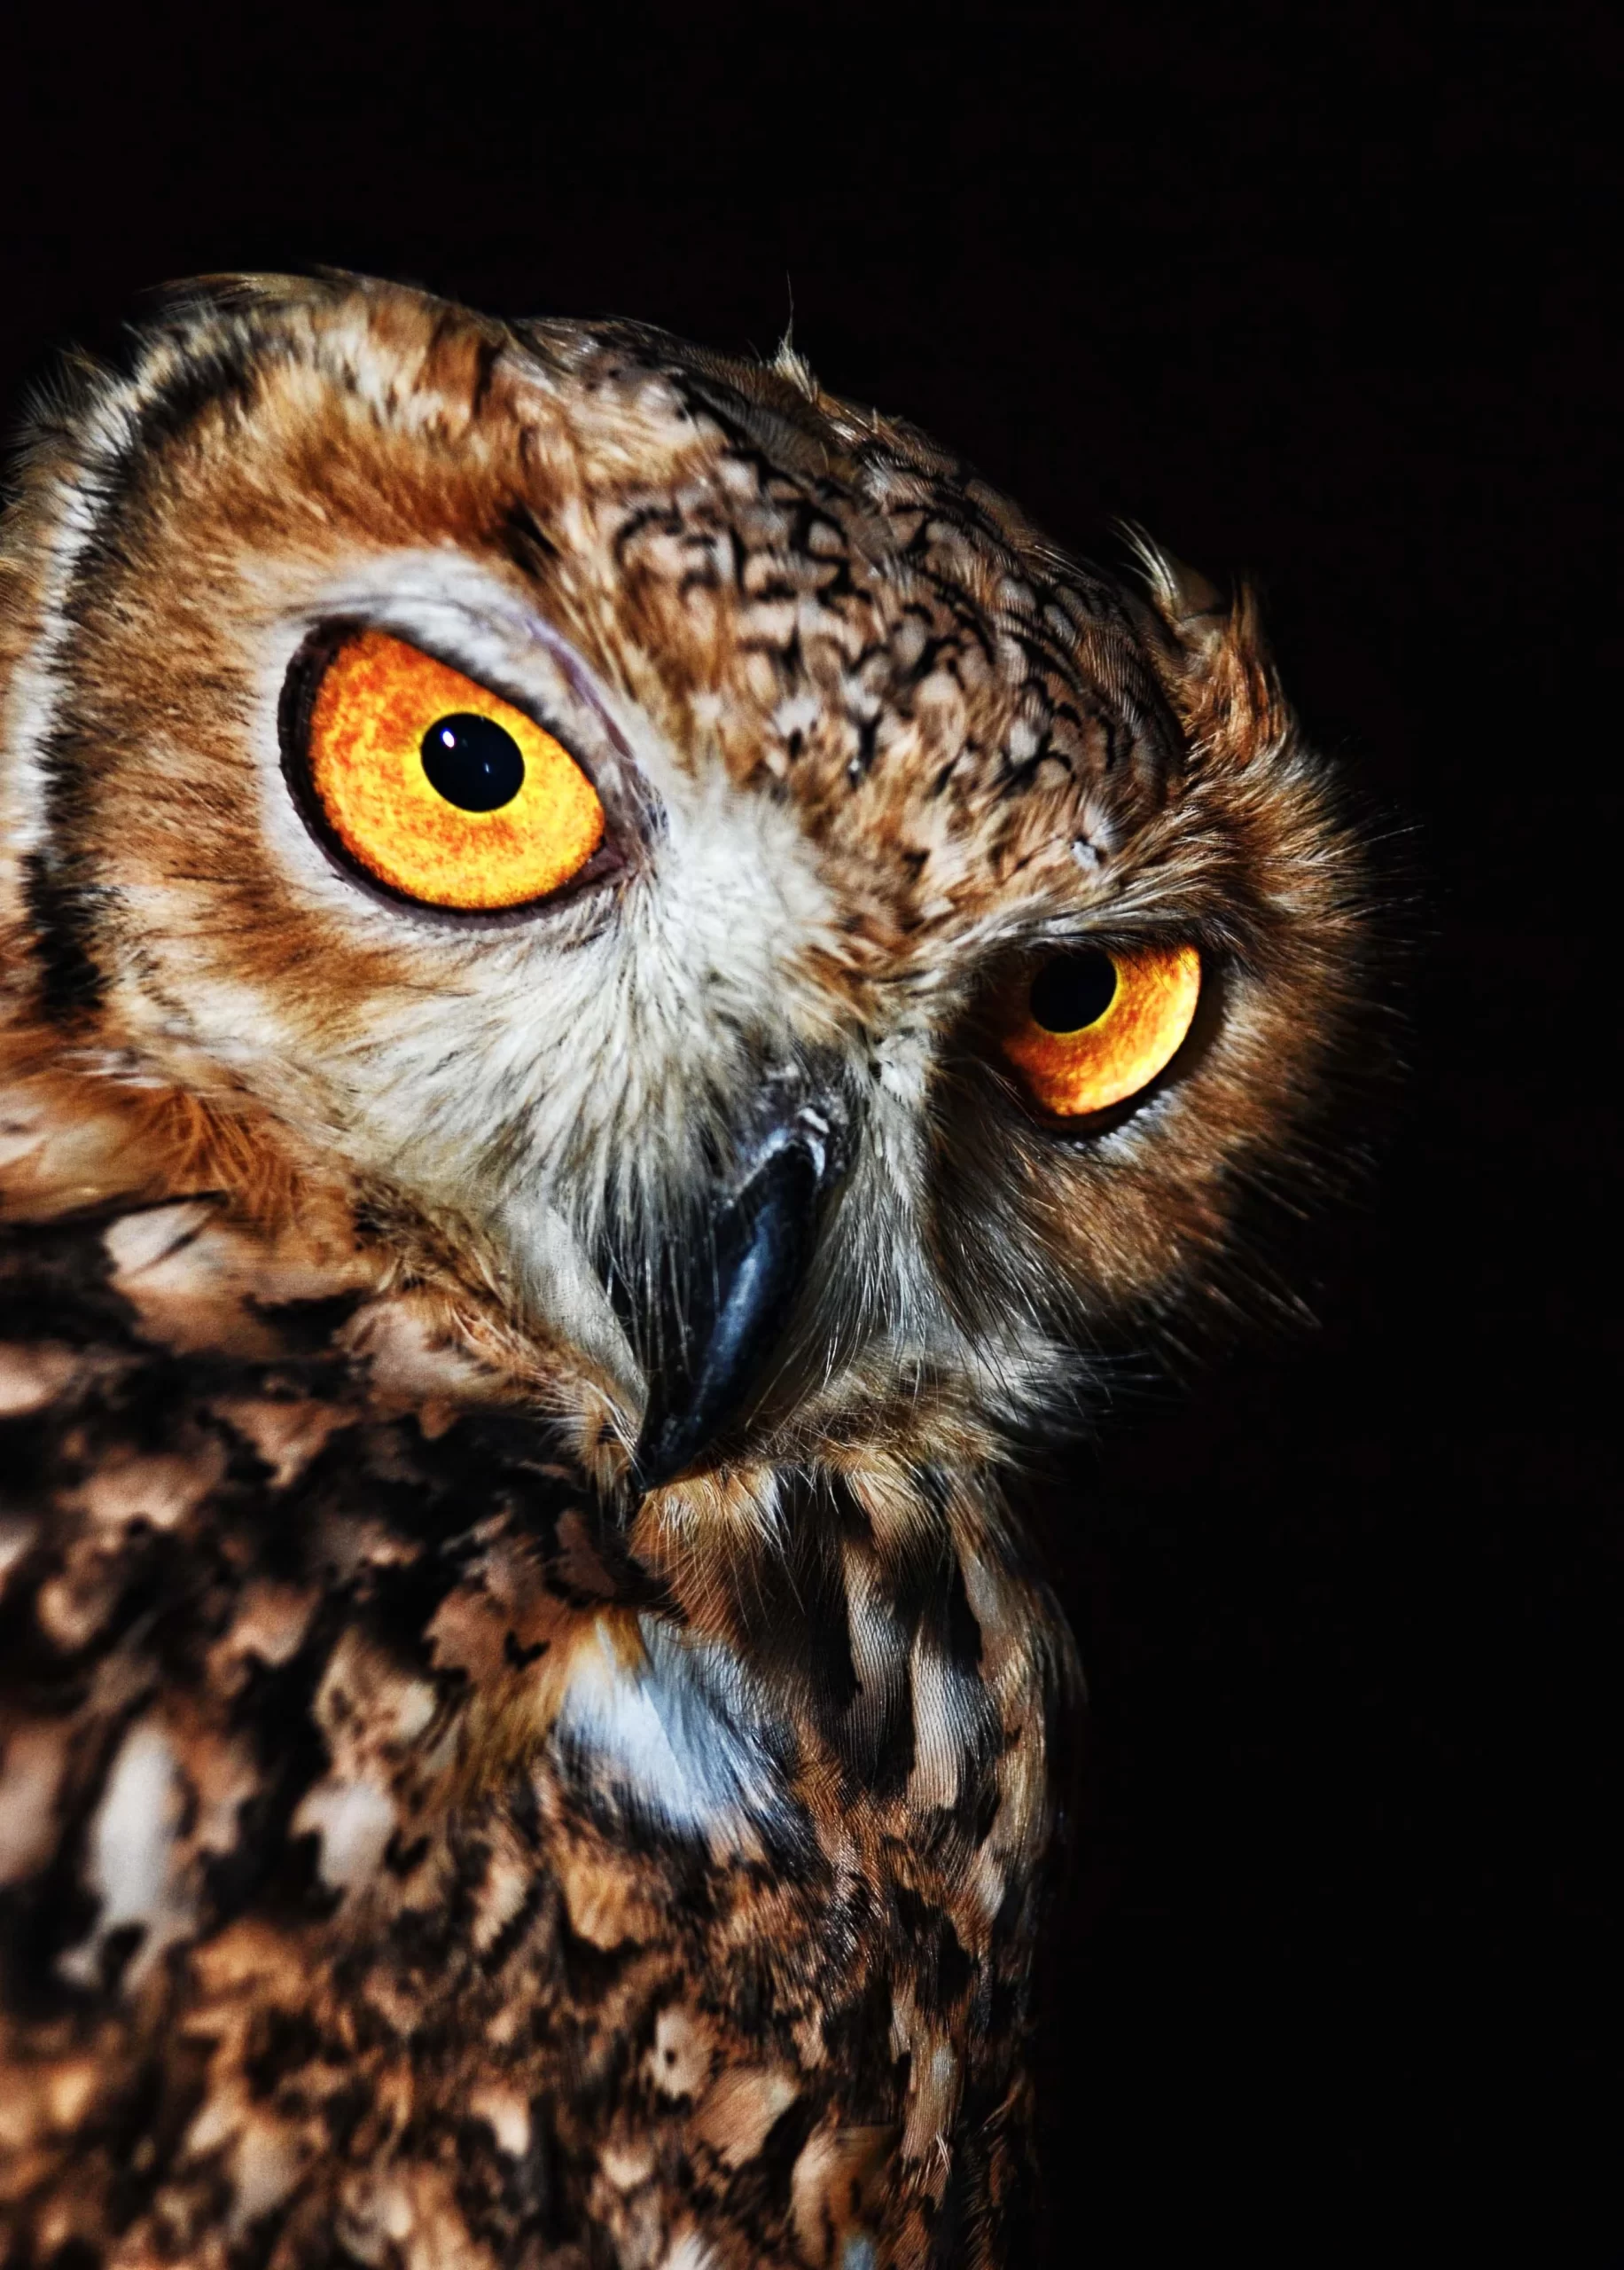 ahmed-badawy-Up close owl-unsplash